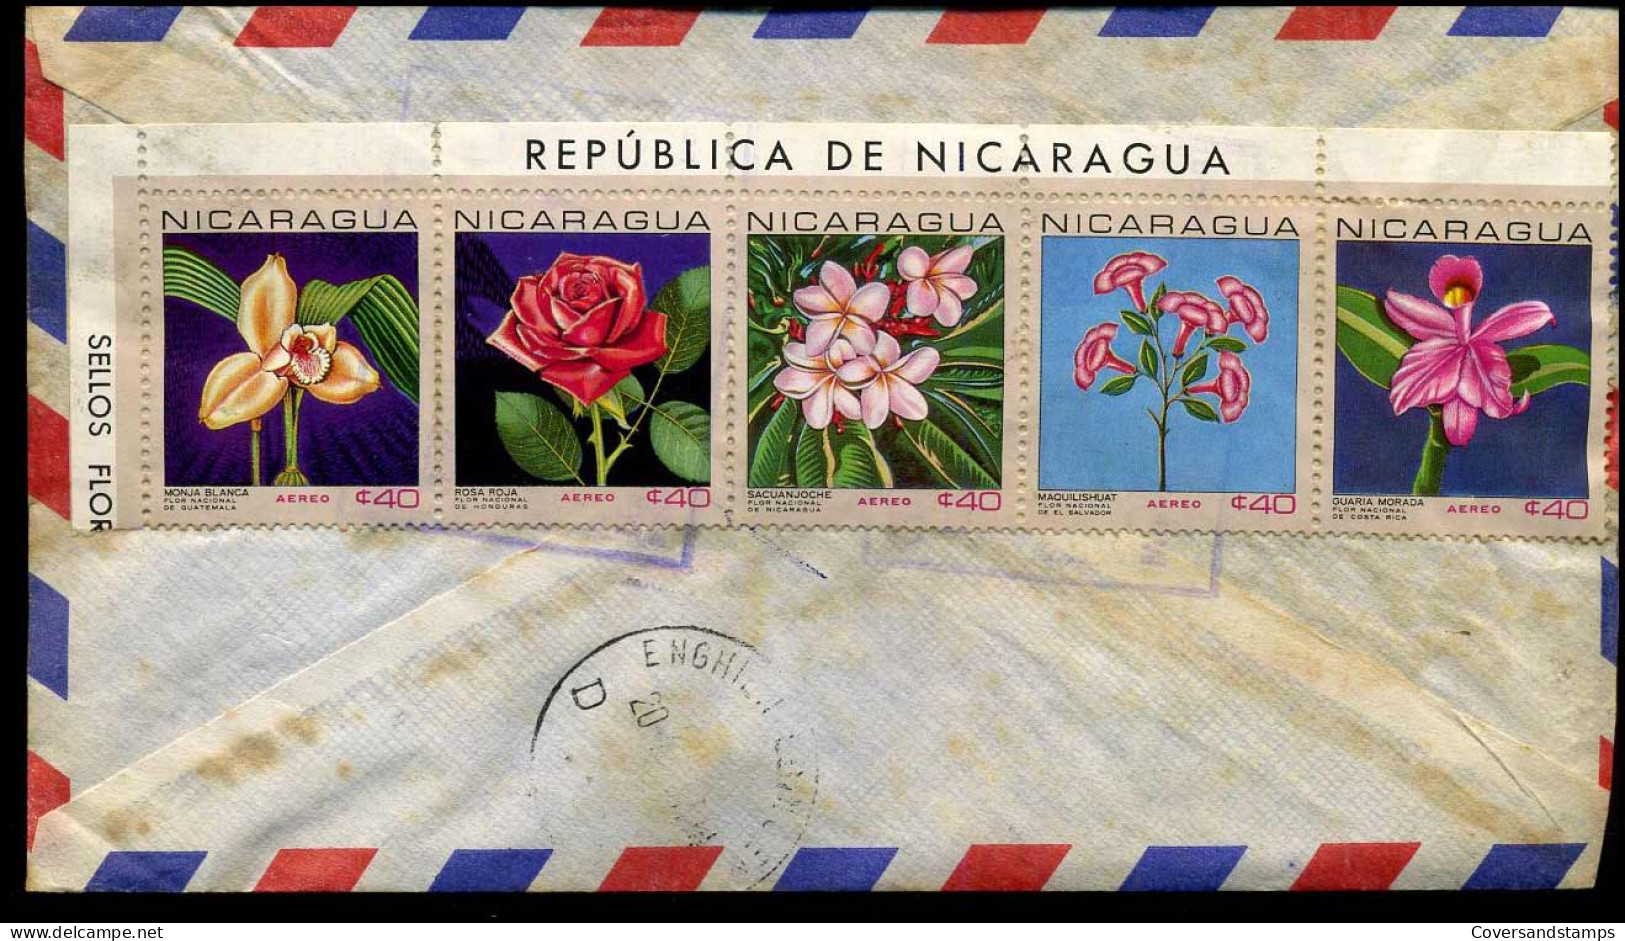 Registered Cover To Petit-Enghien, Belgium - "Oficina De Control De Especies Postales Y Filatelia" - Nicaragua